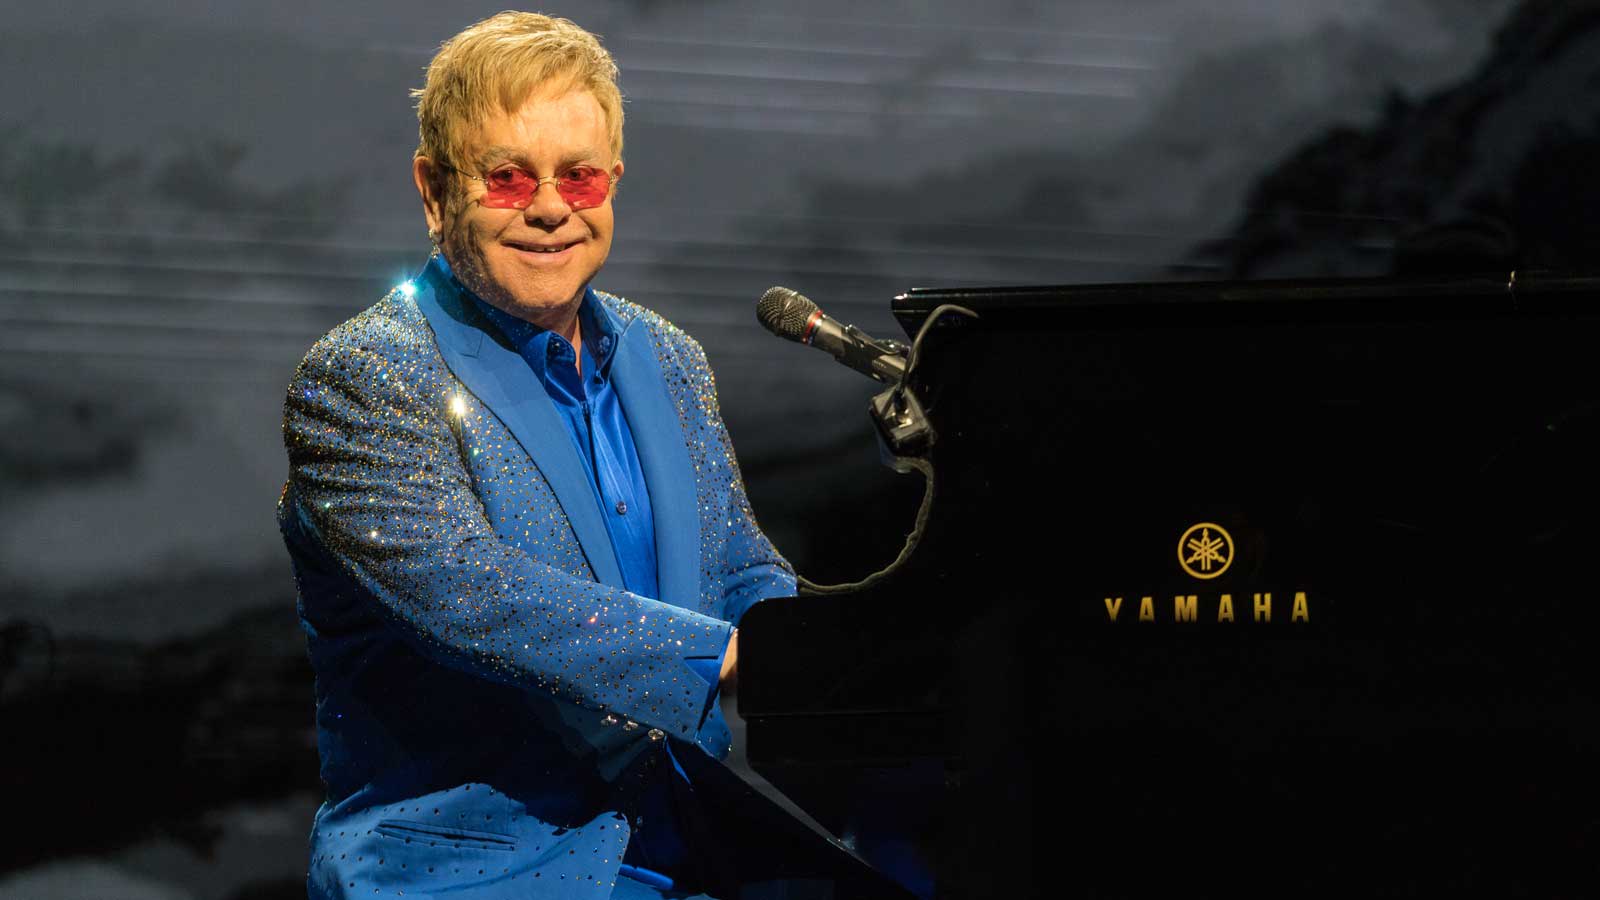 Tuesday night's alright (for Elton John)